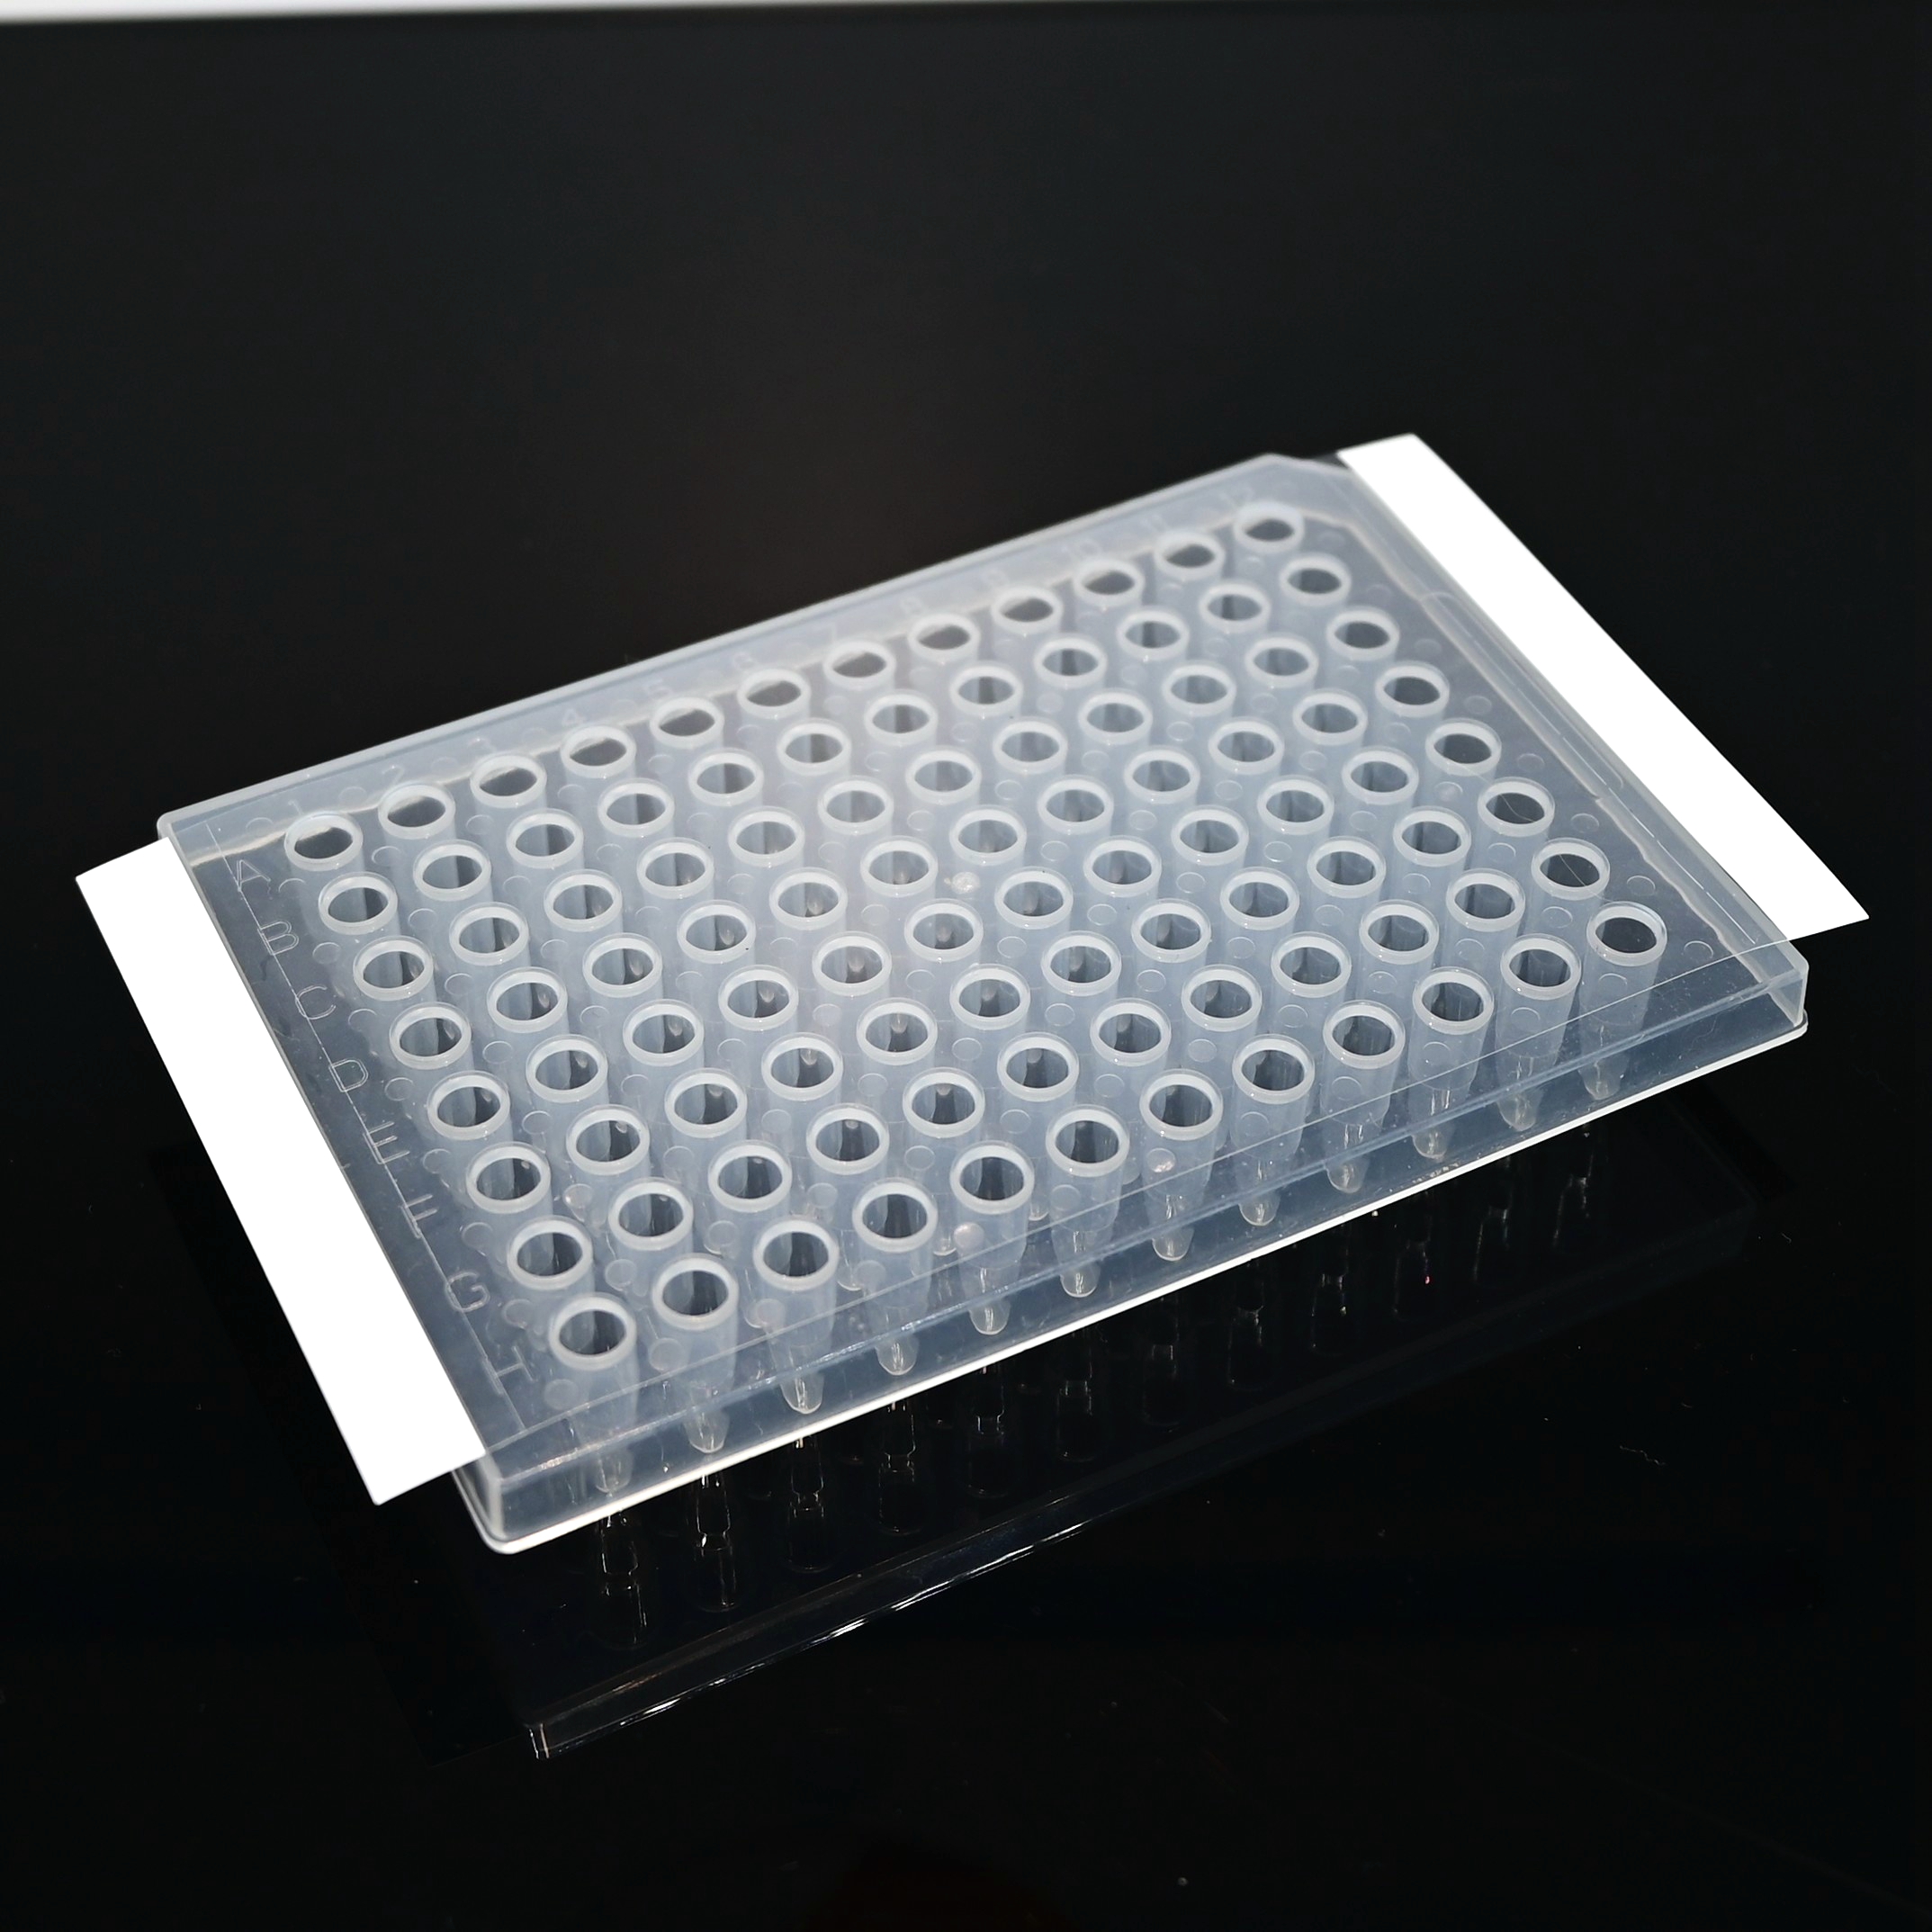 PCR Plate Sealing Film(3M Pressure-sensitive adhesive) Featured Image